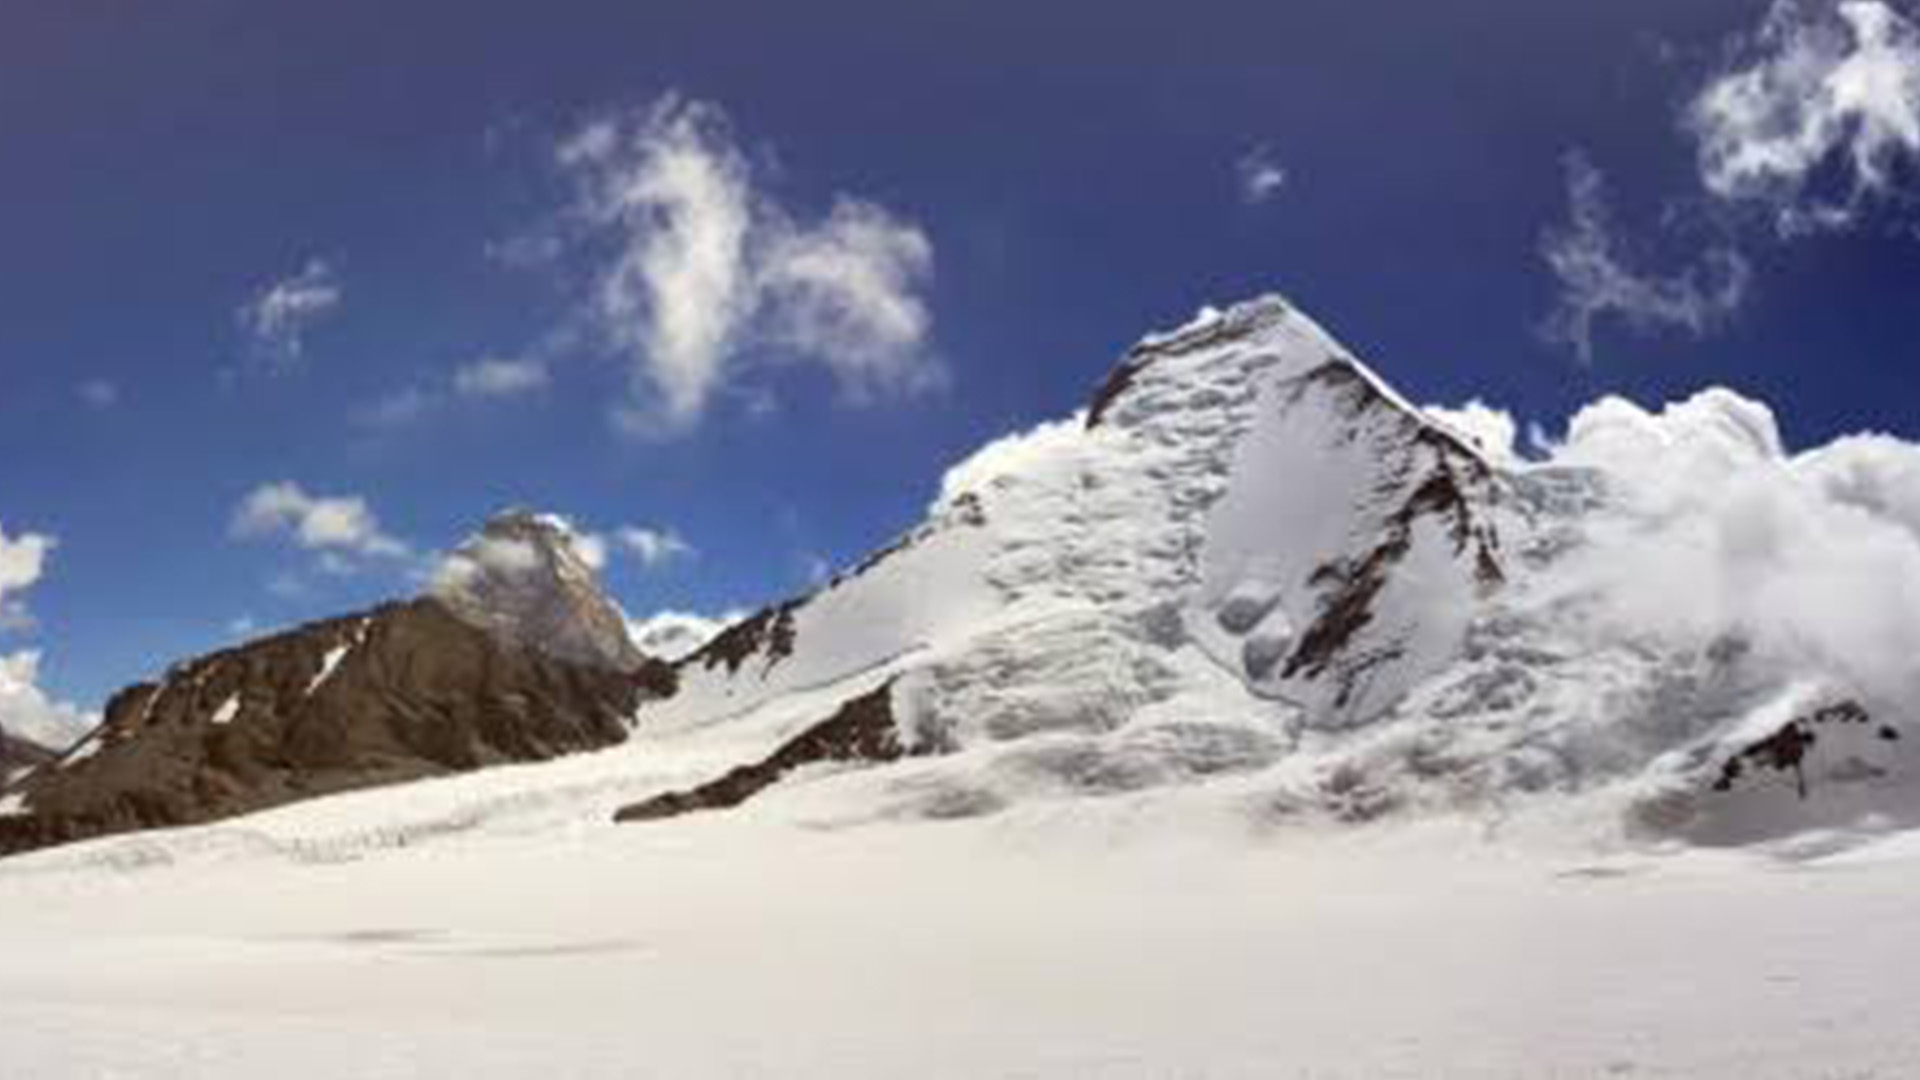 Nun Peak Expedition